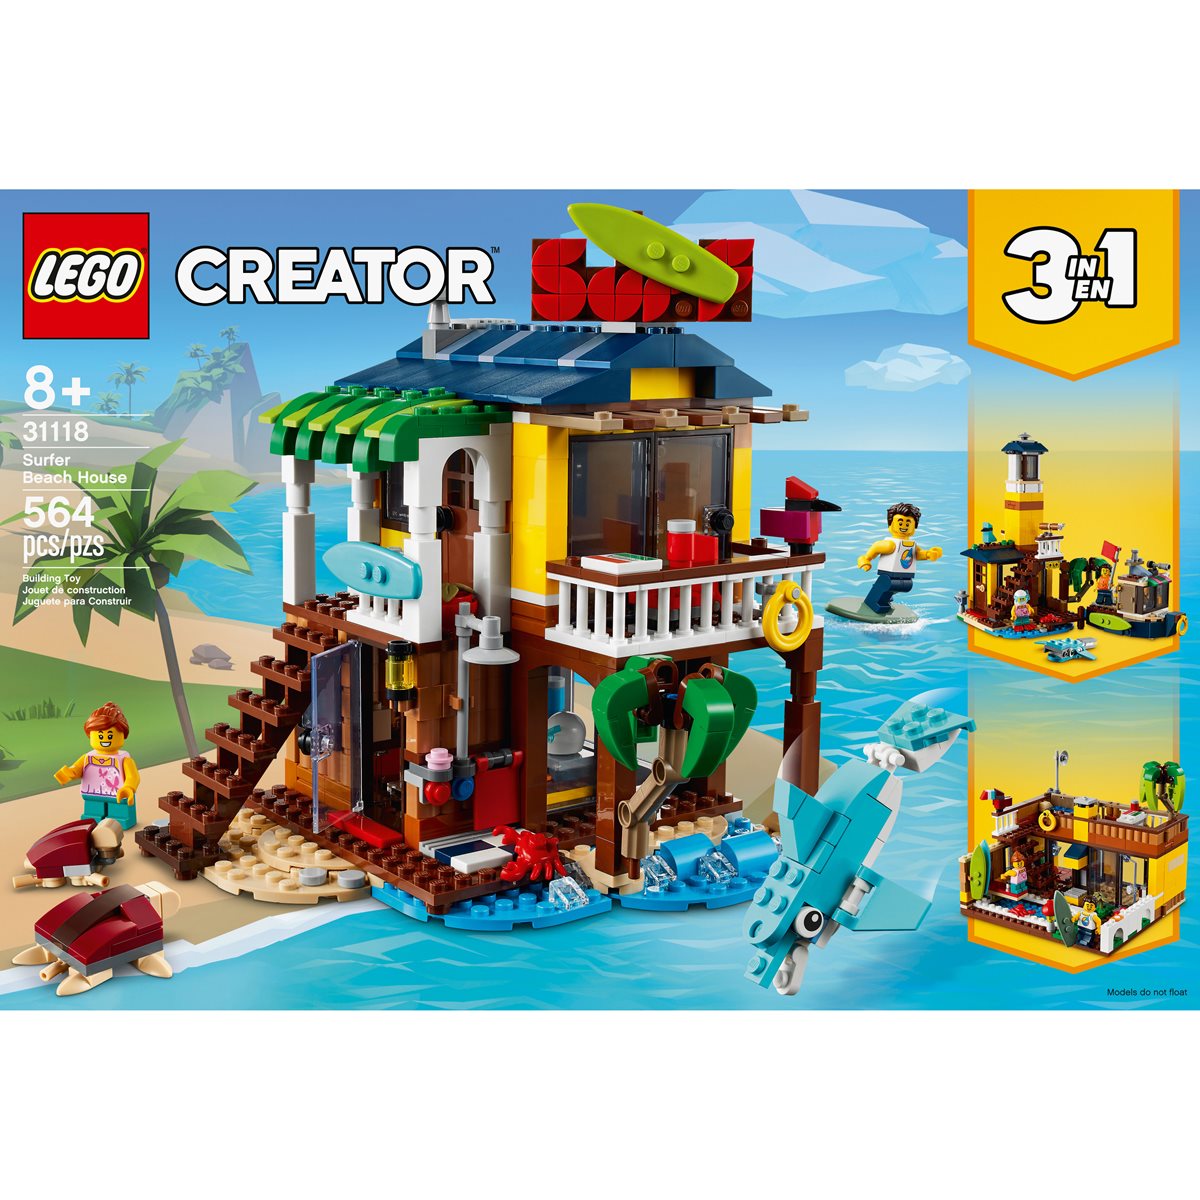 LEGO 31118 Creator Surfer Beach House - Entertainment Earth